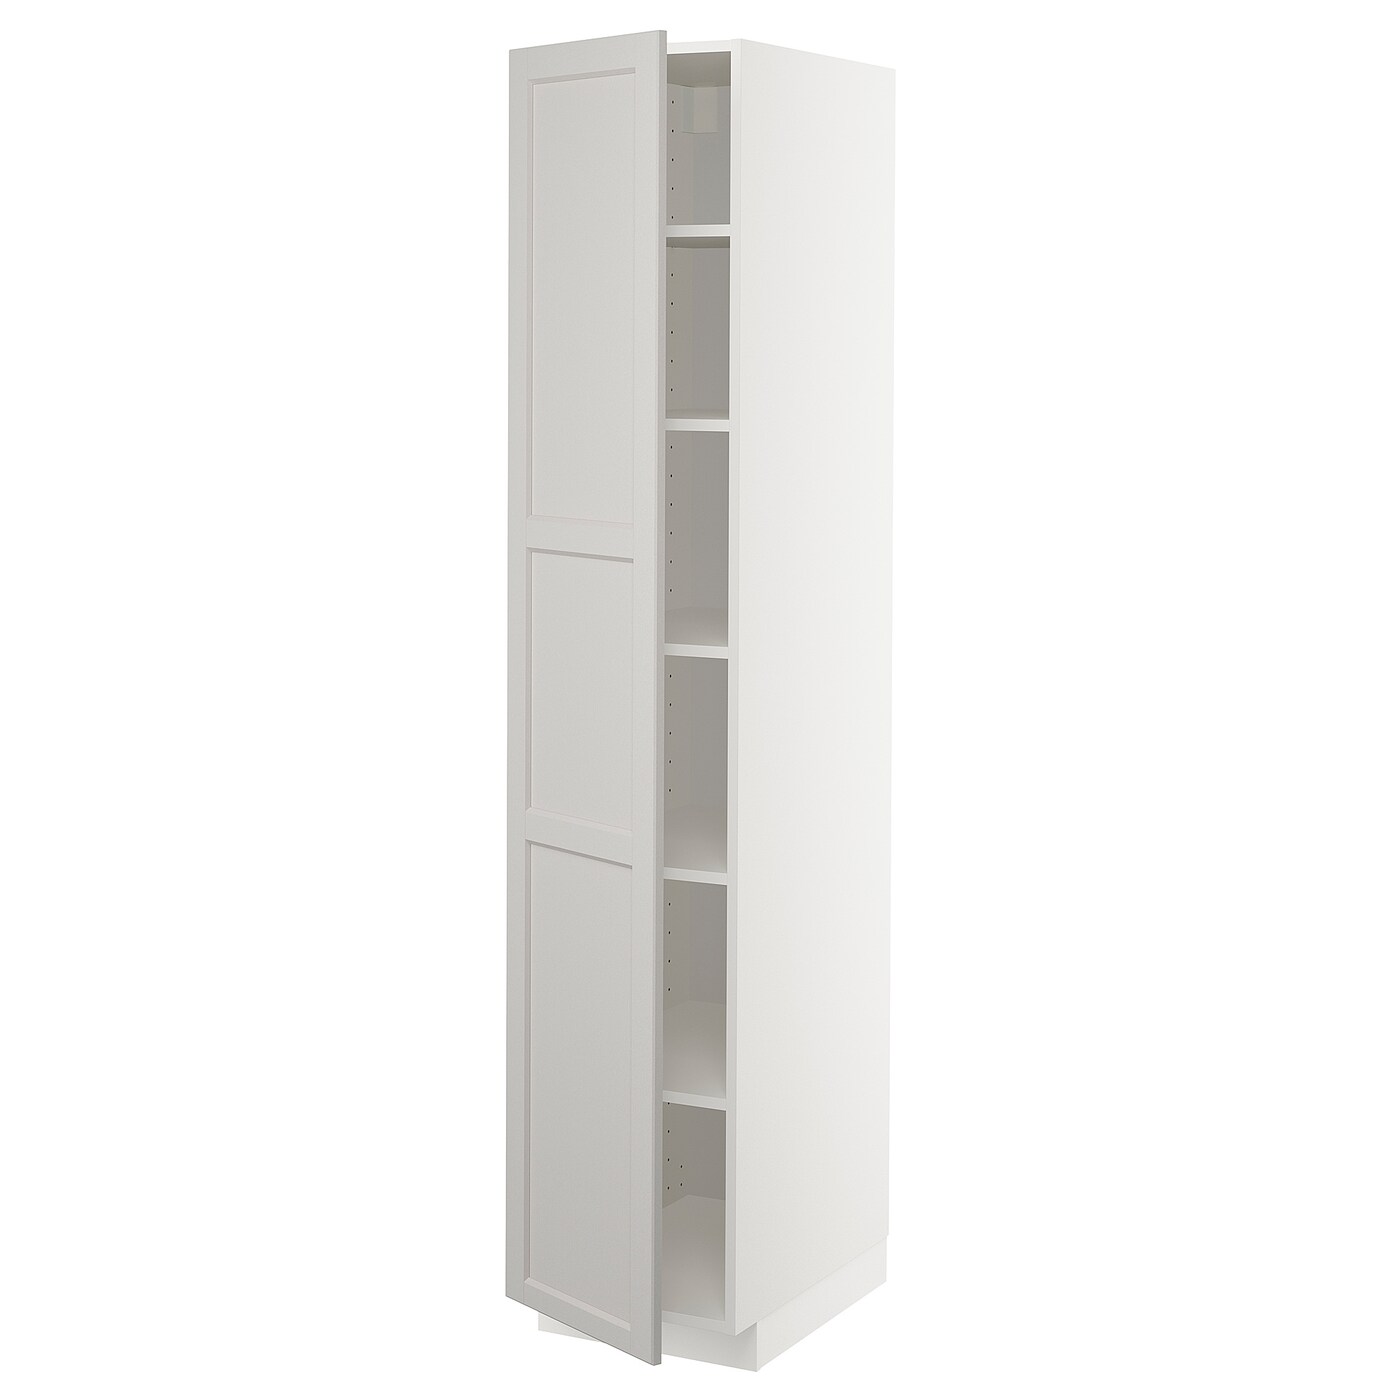 Высокий кухонный шкаф с полками - IKEA METOD/МЕТОД ИКЕА, 200х60х40 см, белый/серый